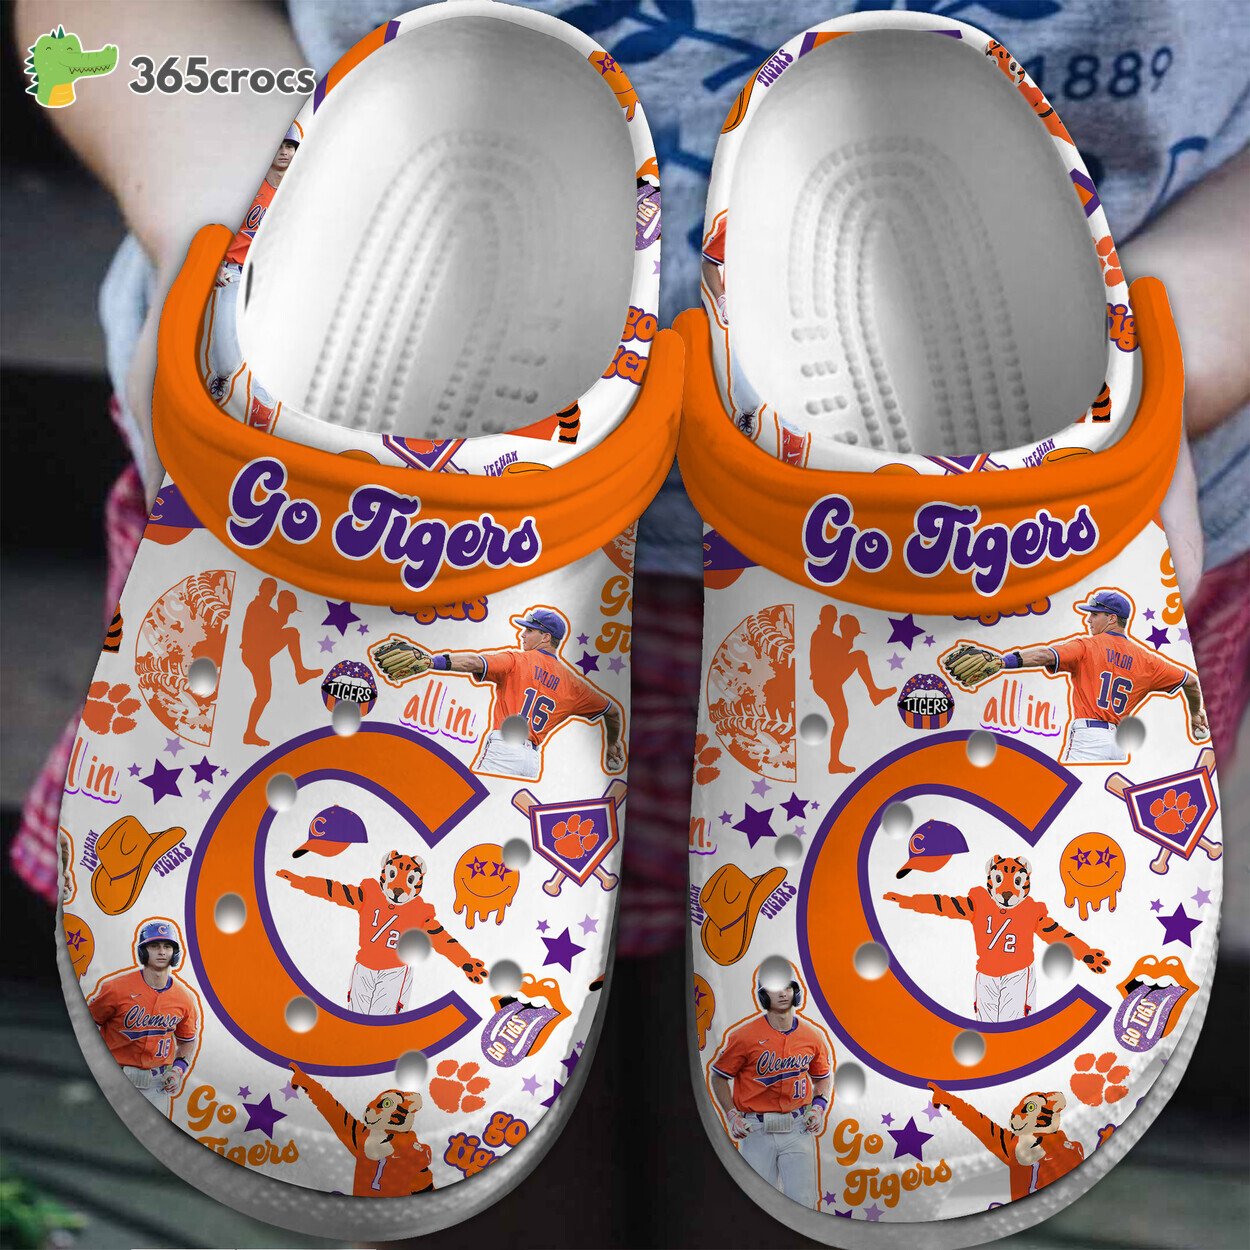 Clemson Tigers NCAA Sport Edition Two Premium Comfortable Crocss Clogs Shoes